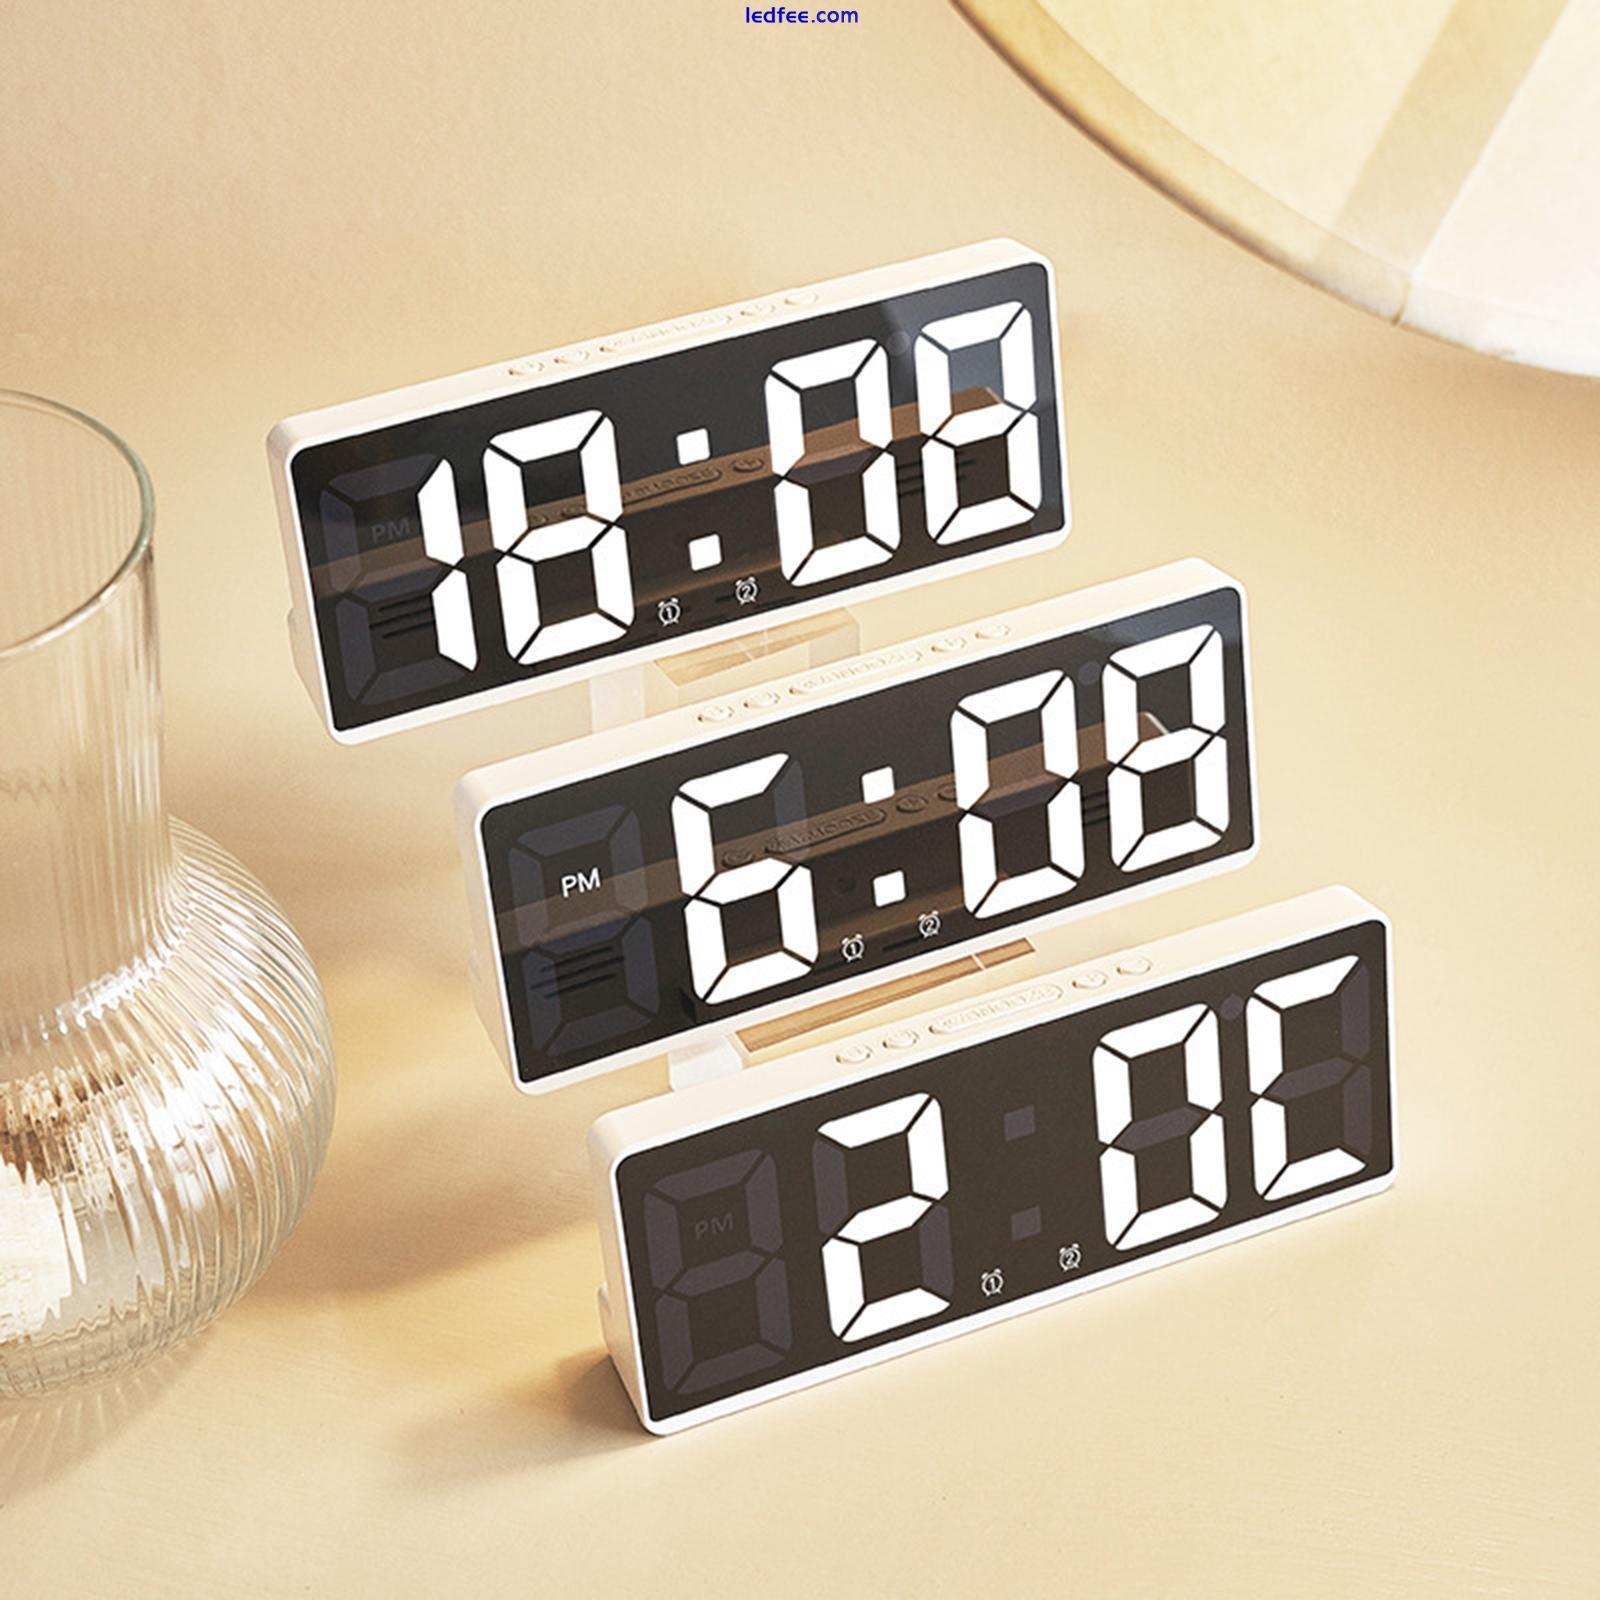 Large Number Alarm Clock Table Date LED Display for Elderly Home Living 3 